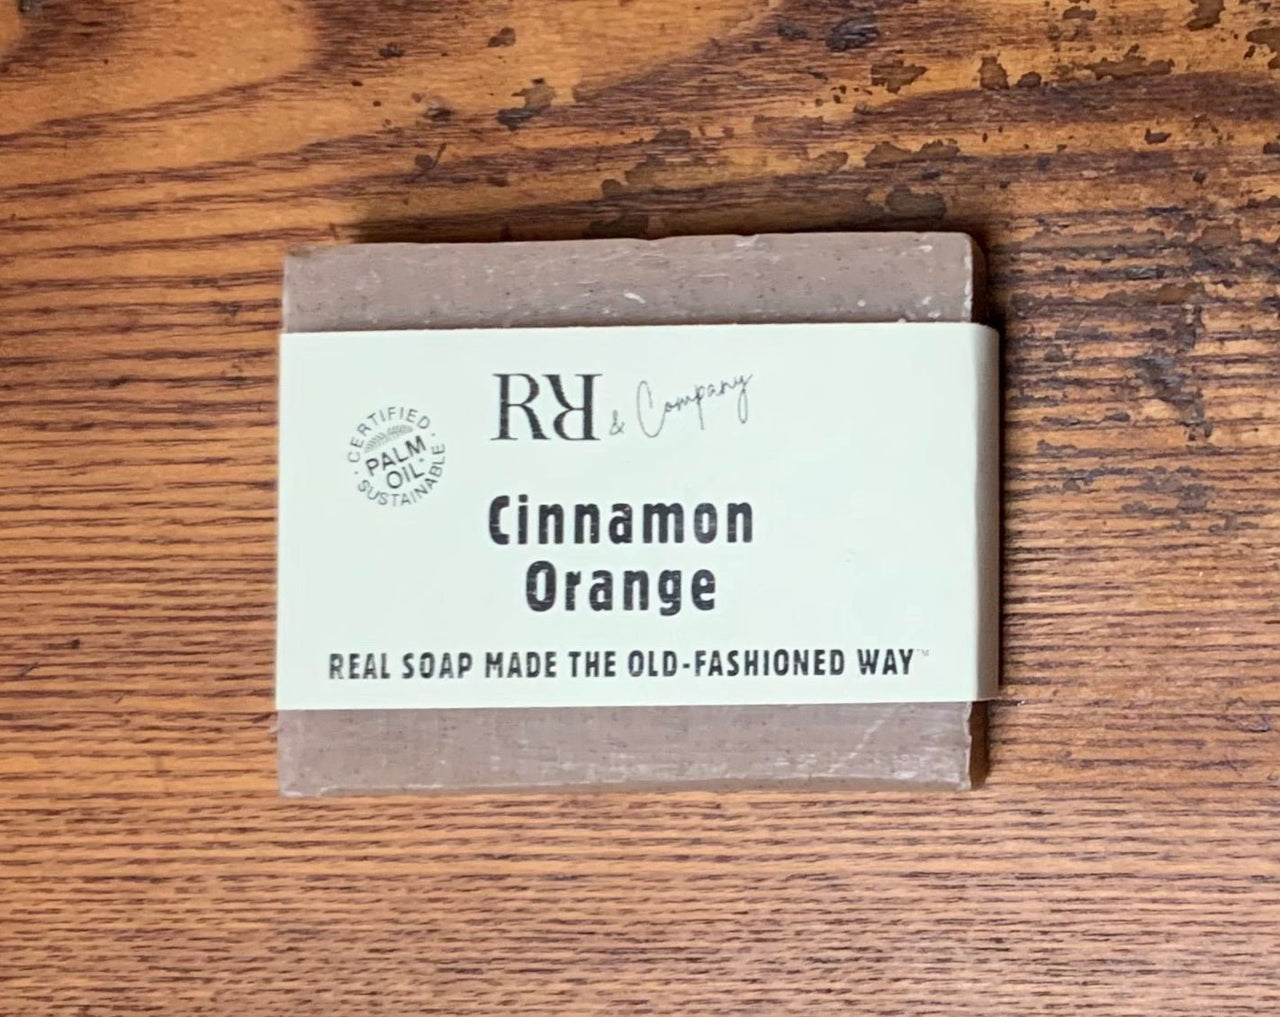 Cinnamon orange soap - Rubbish Restyled - Rubbish Restyled